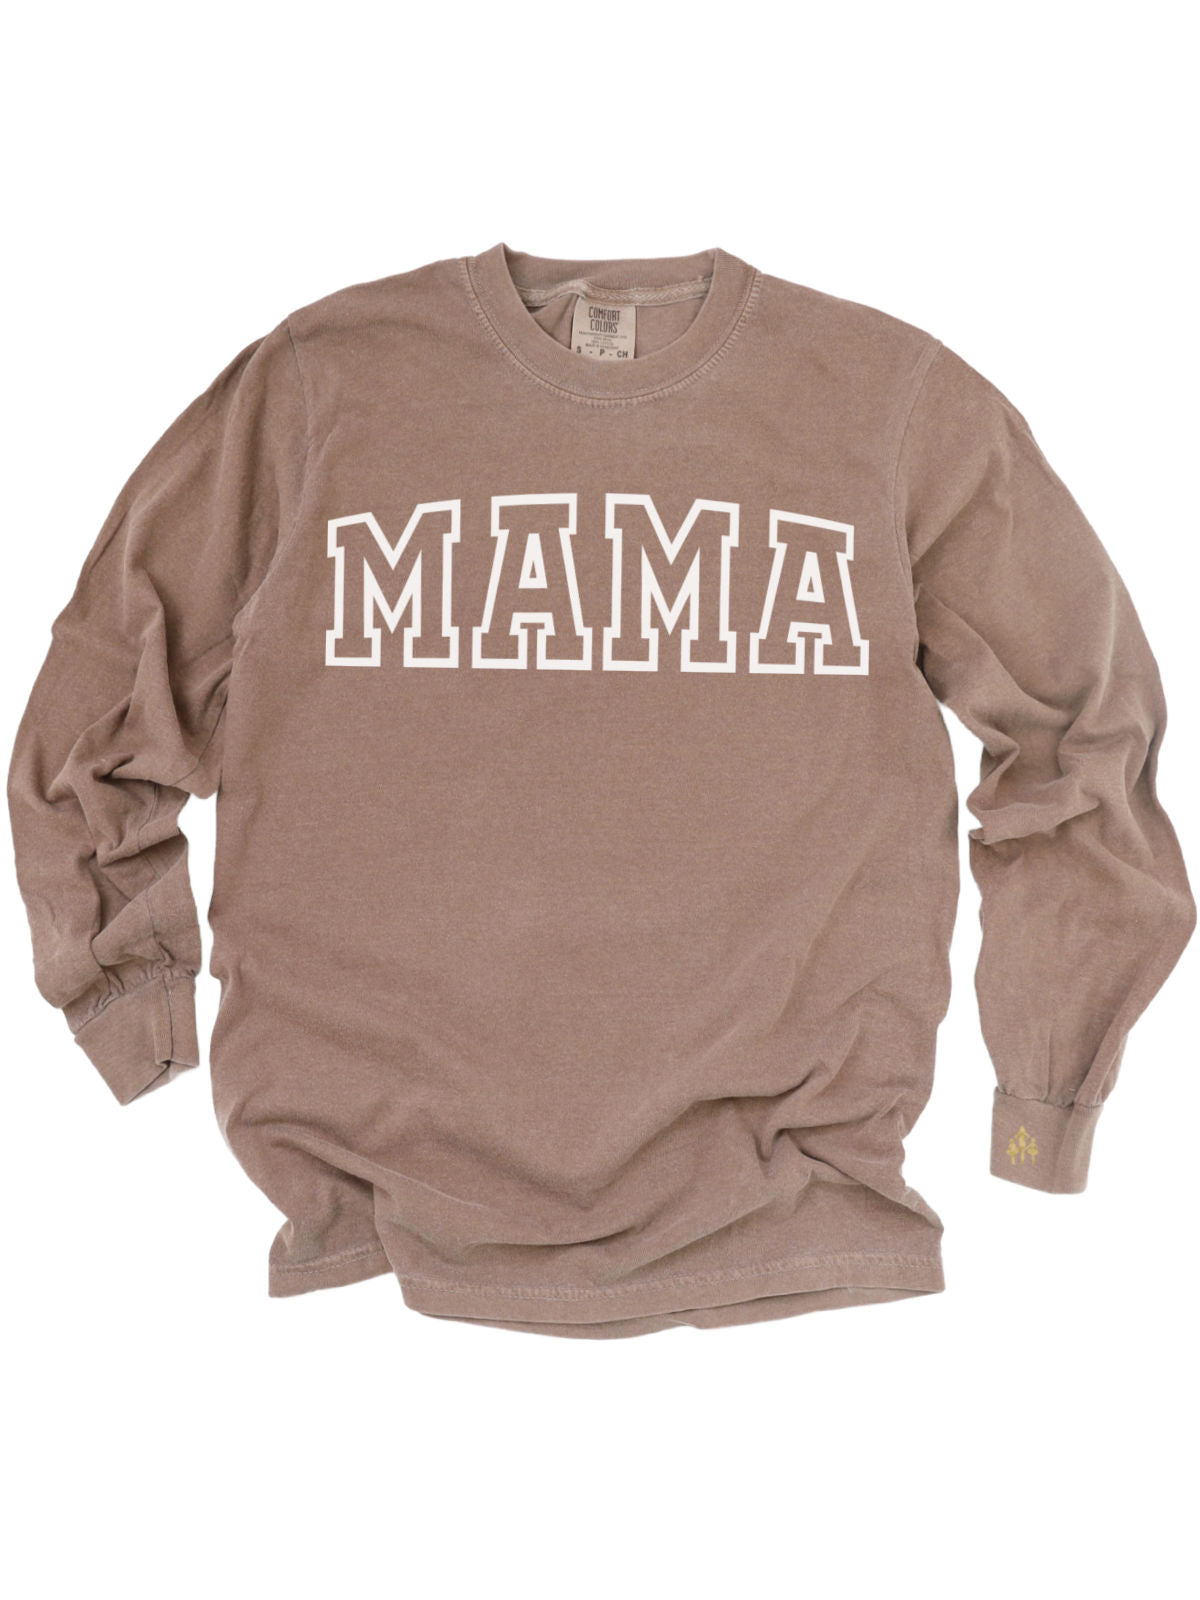 MAMA Varsity Long Sleeve Espresso Brown Shirt